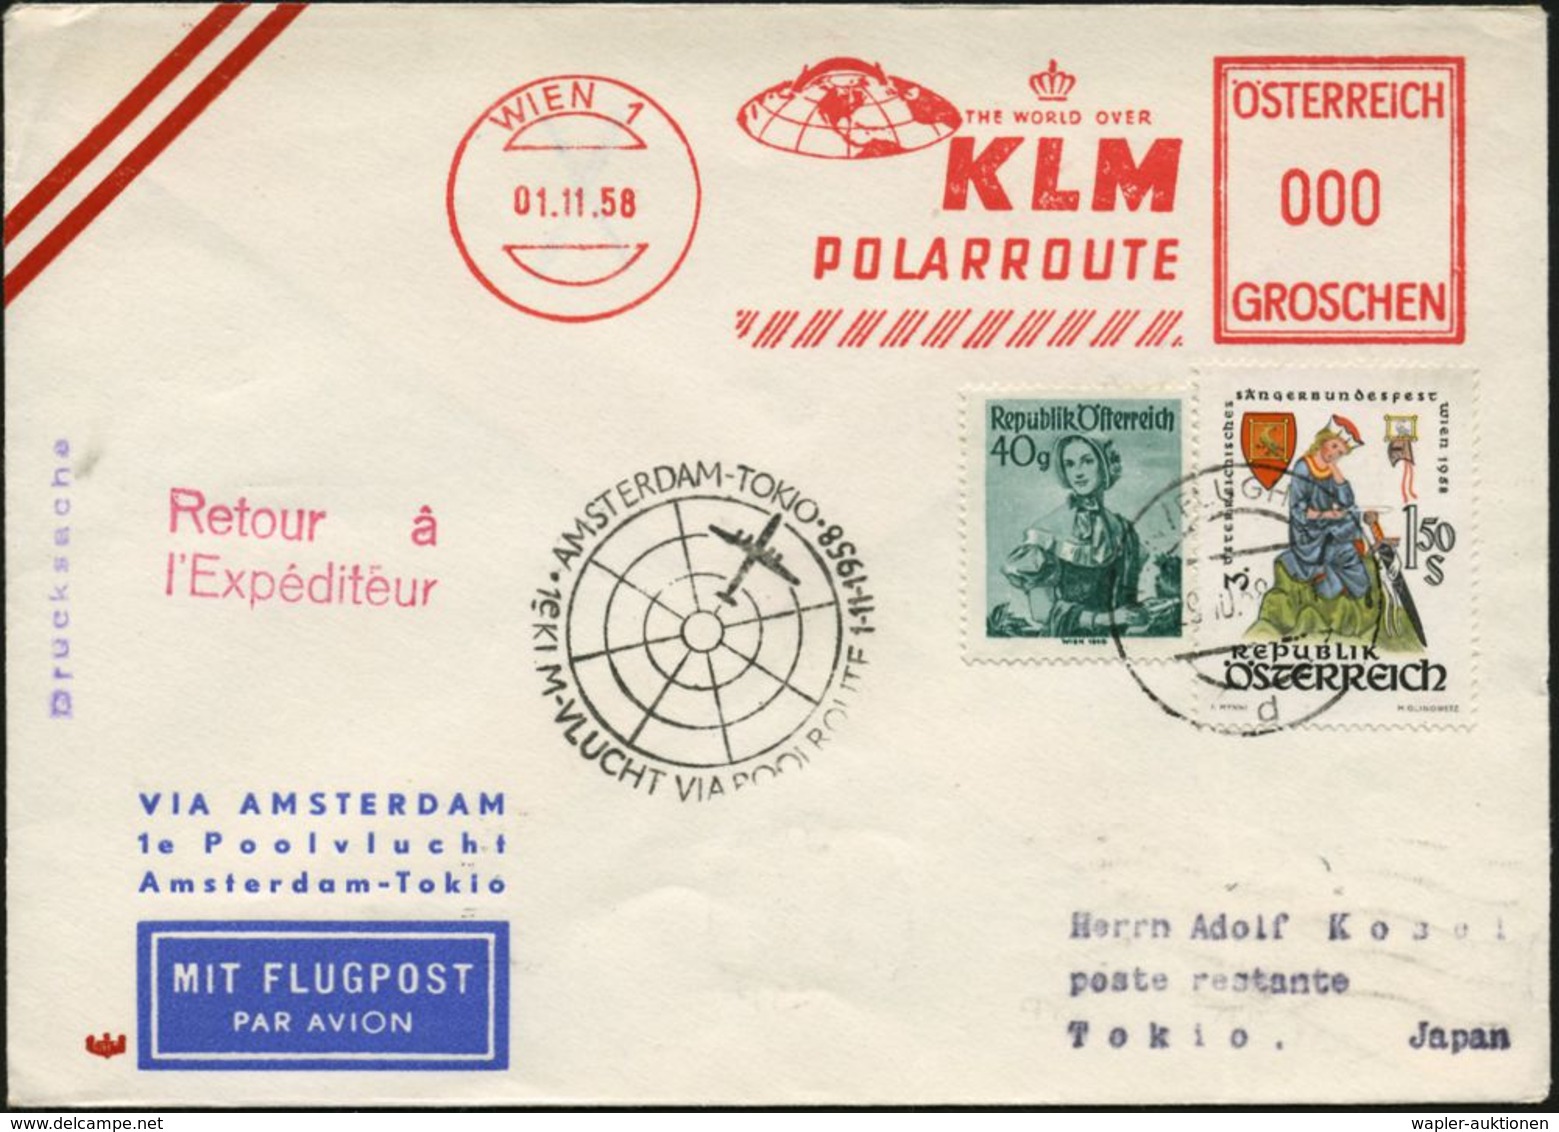 ÖSTERREICH 1958 (1.11.) Erstflug-Bf. (KLM): Amsterdam - Tokyo Via Nordpol (AS) AFS 000: WIEN 1/KLM/POLARROUTE (nördl. Gl - Expéditions Arctiques